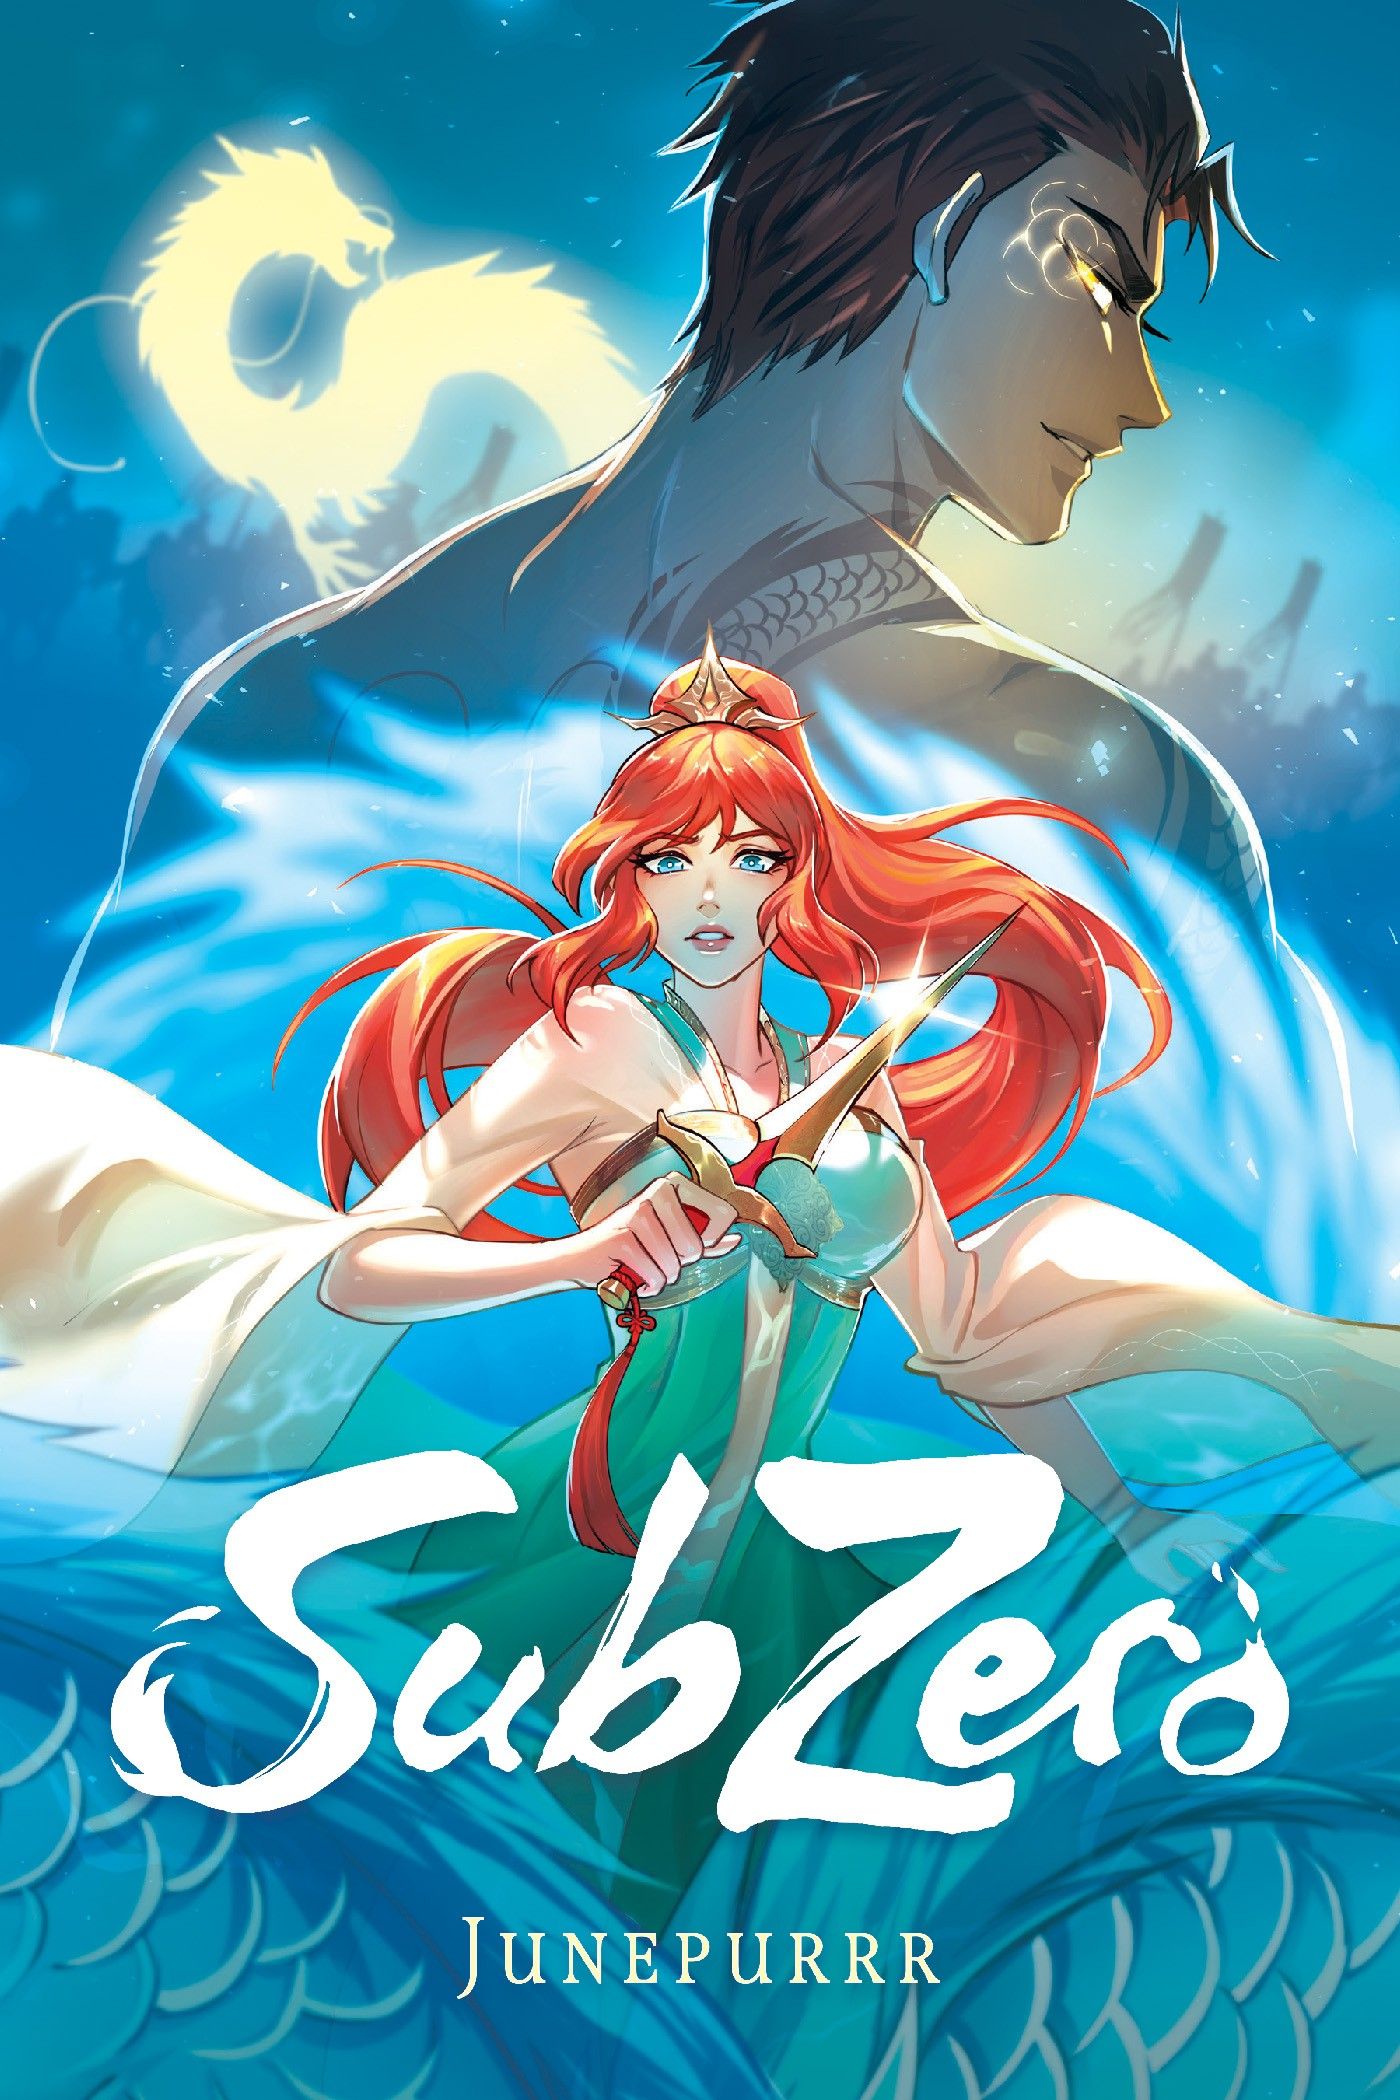 Exclusive: Hit Webtoon SUBZERO Lands Print Edition This September From Oni Press